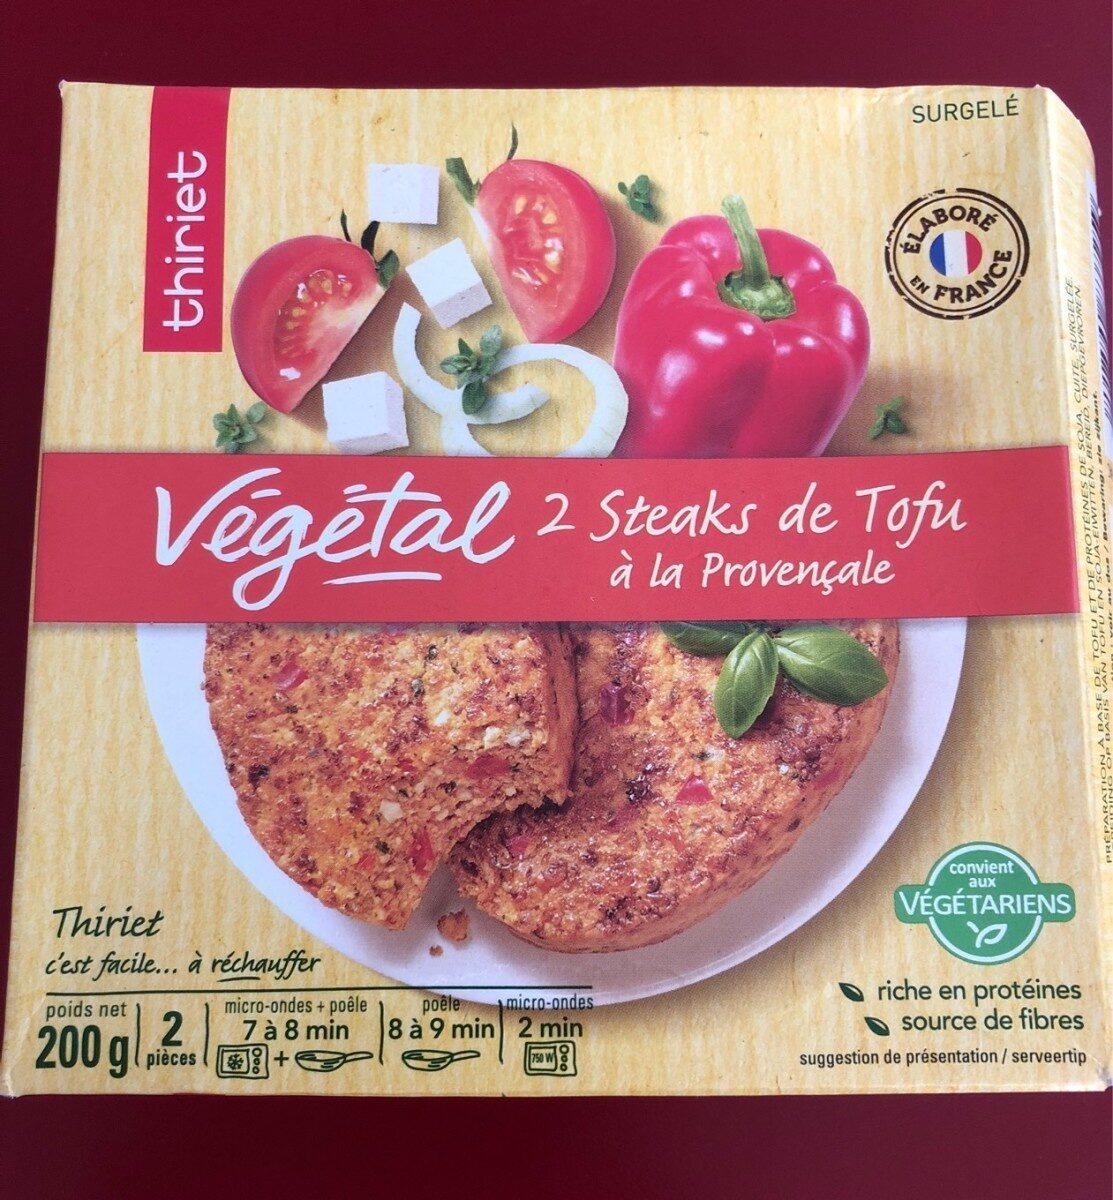 Steaks de tofu - Product - fr